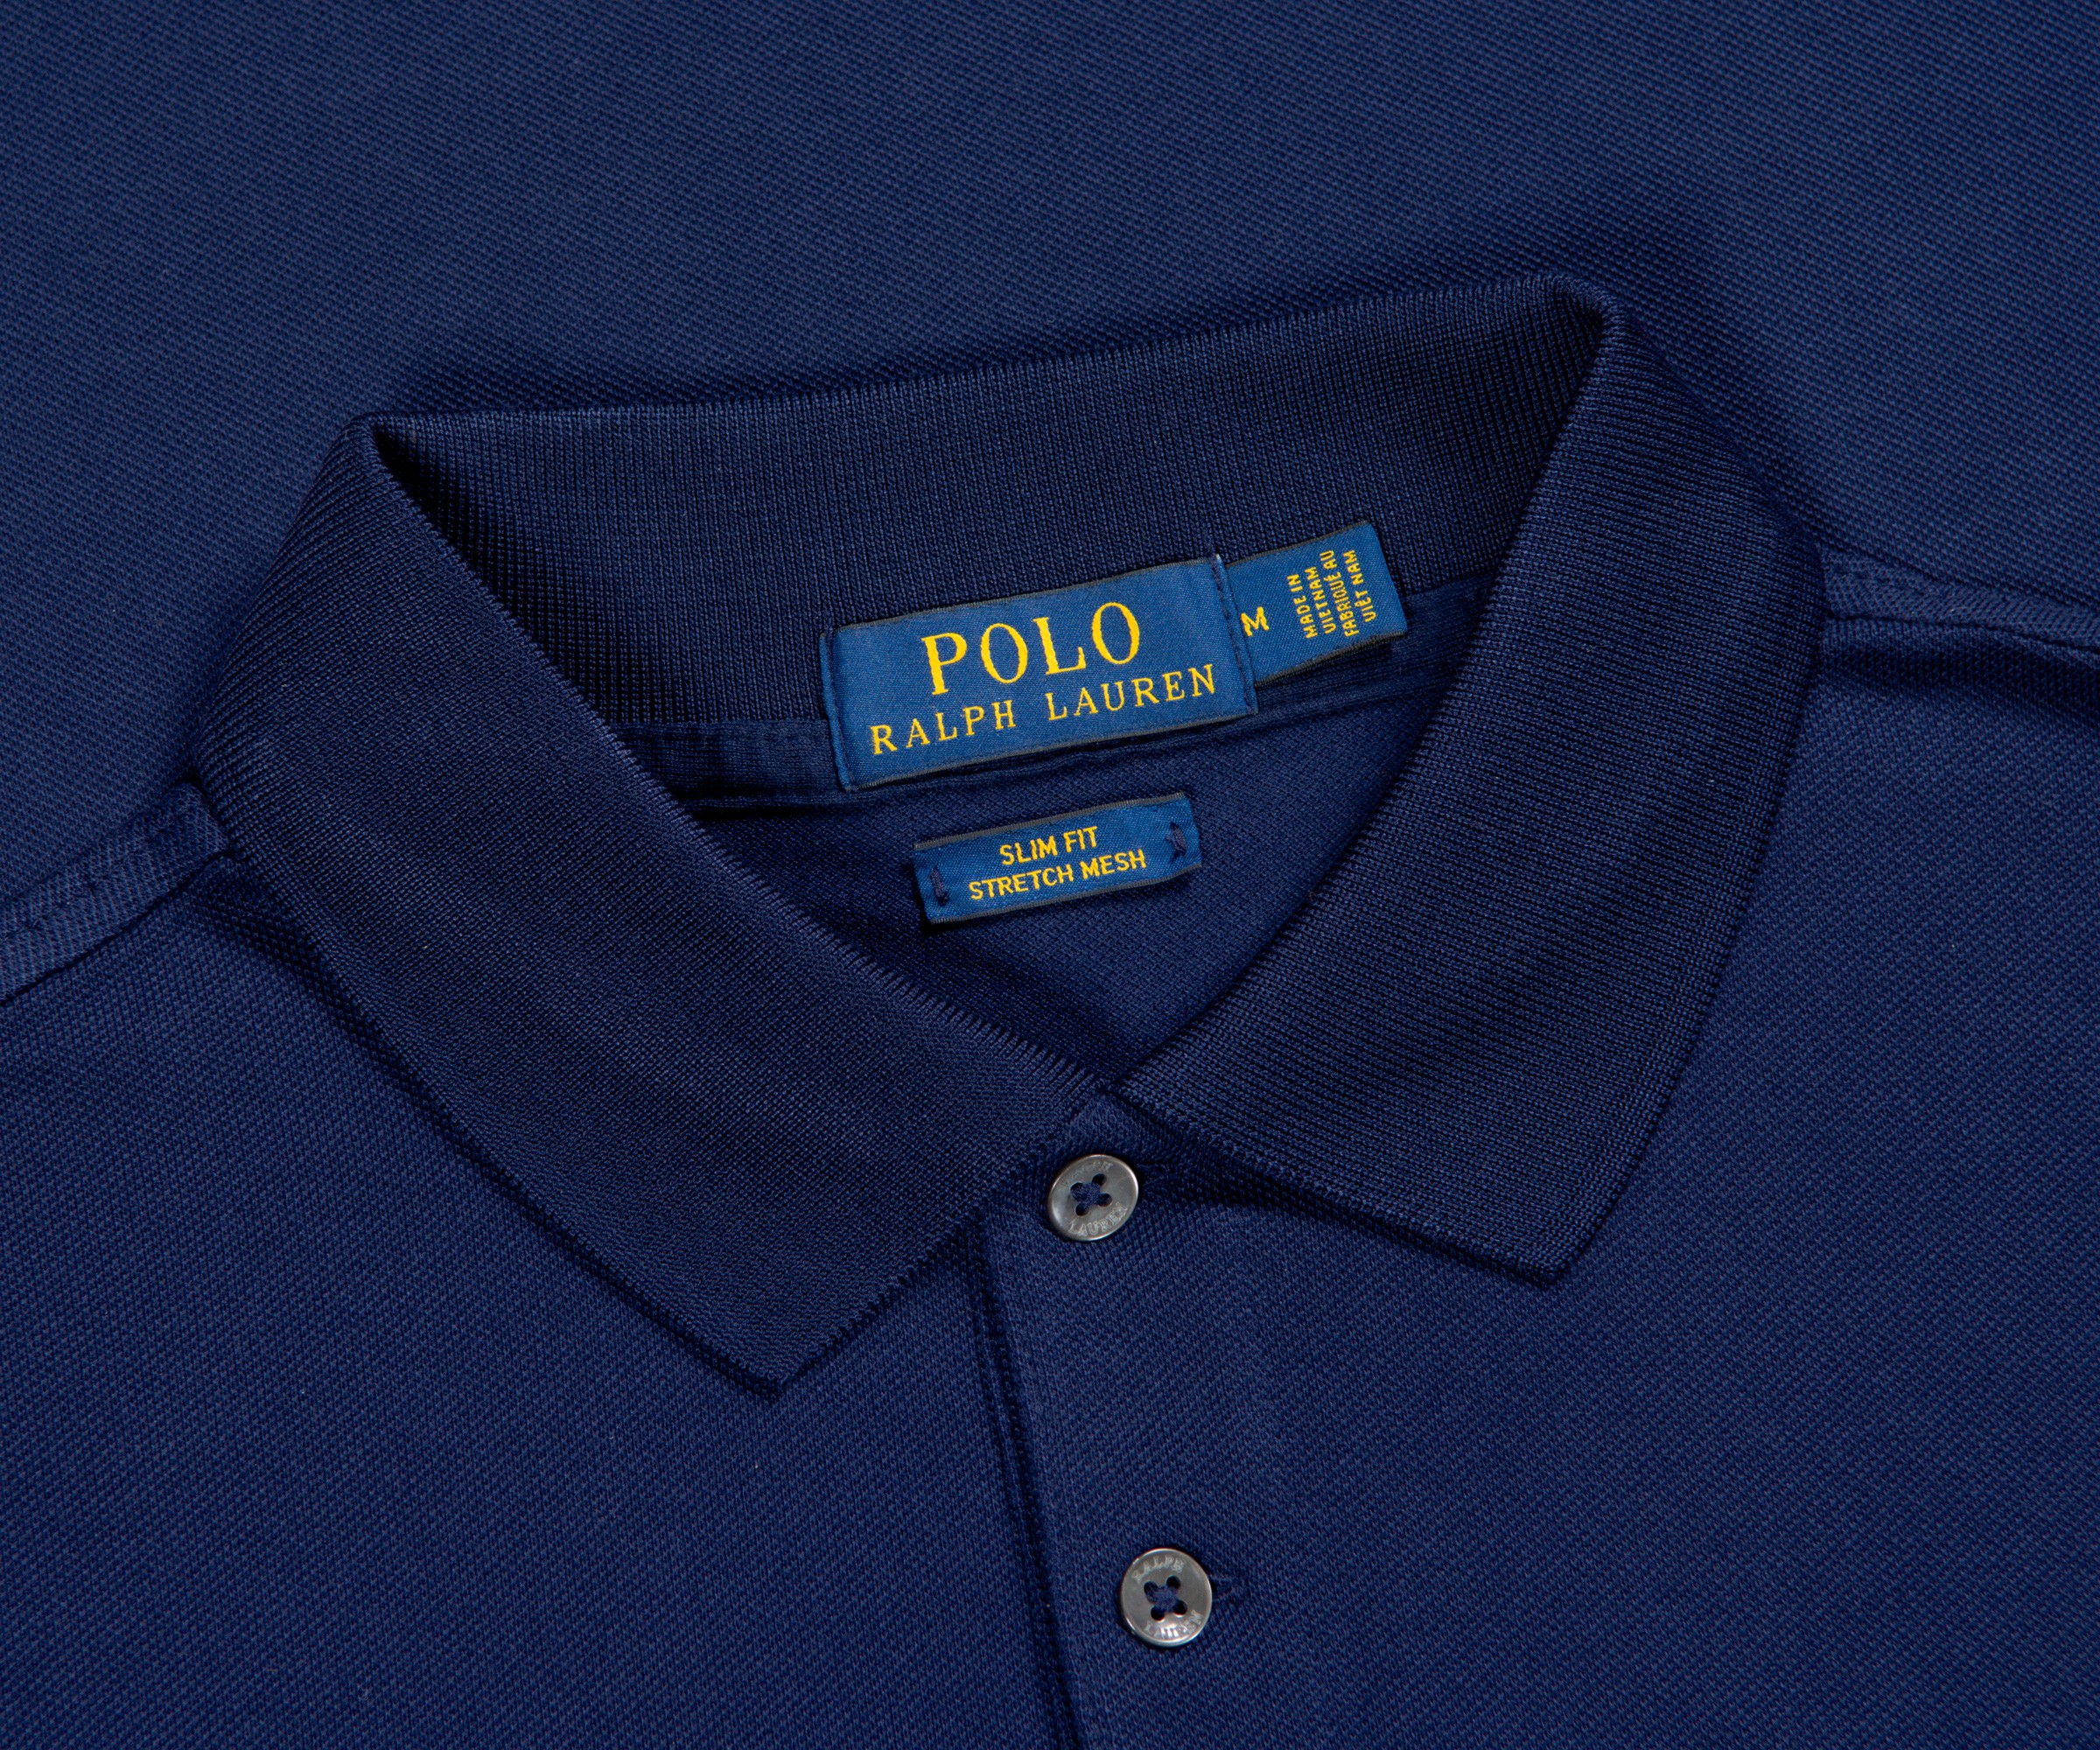 Polo Ralph Lauren Classic Pima Cotton Polo Shirt French Navy